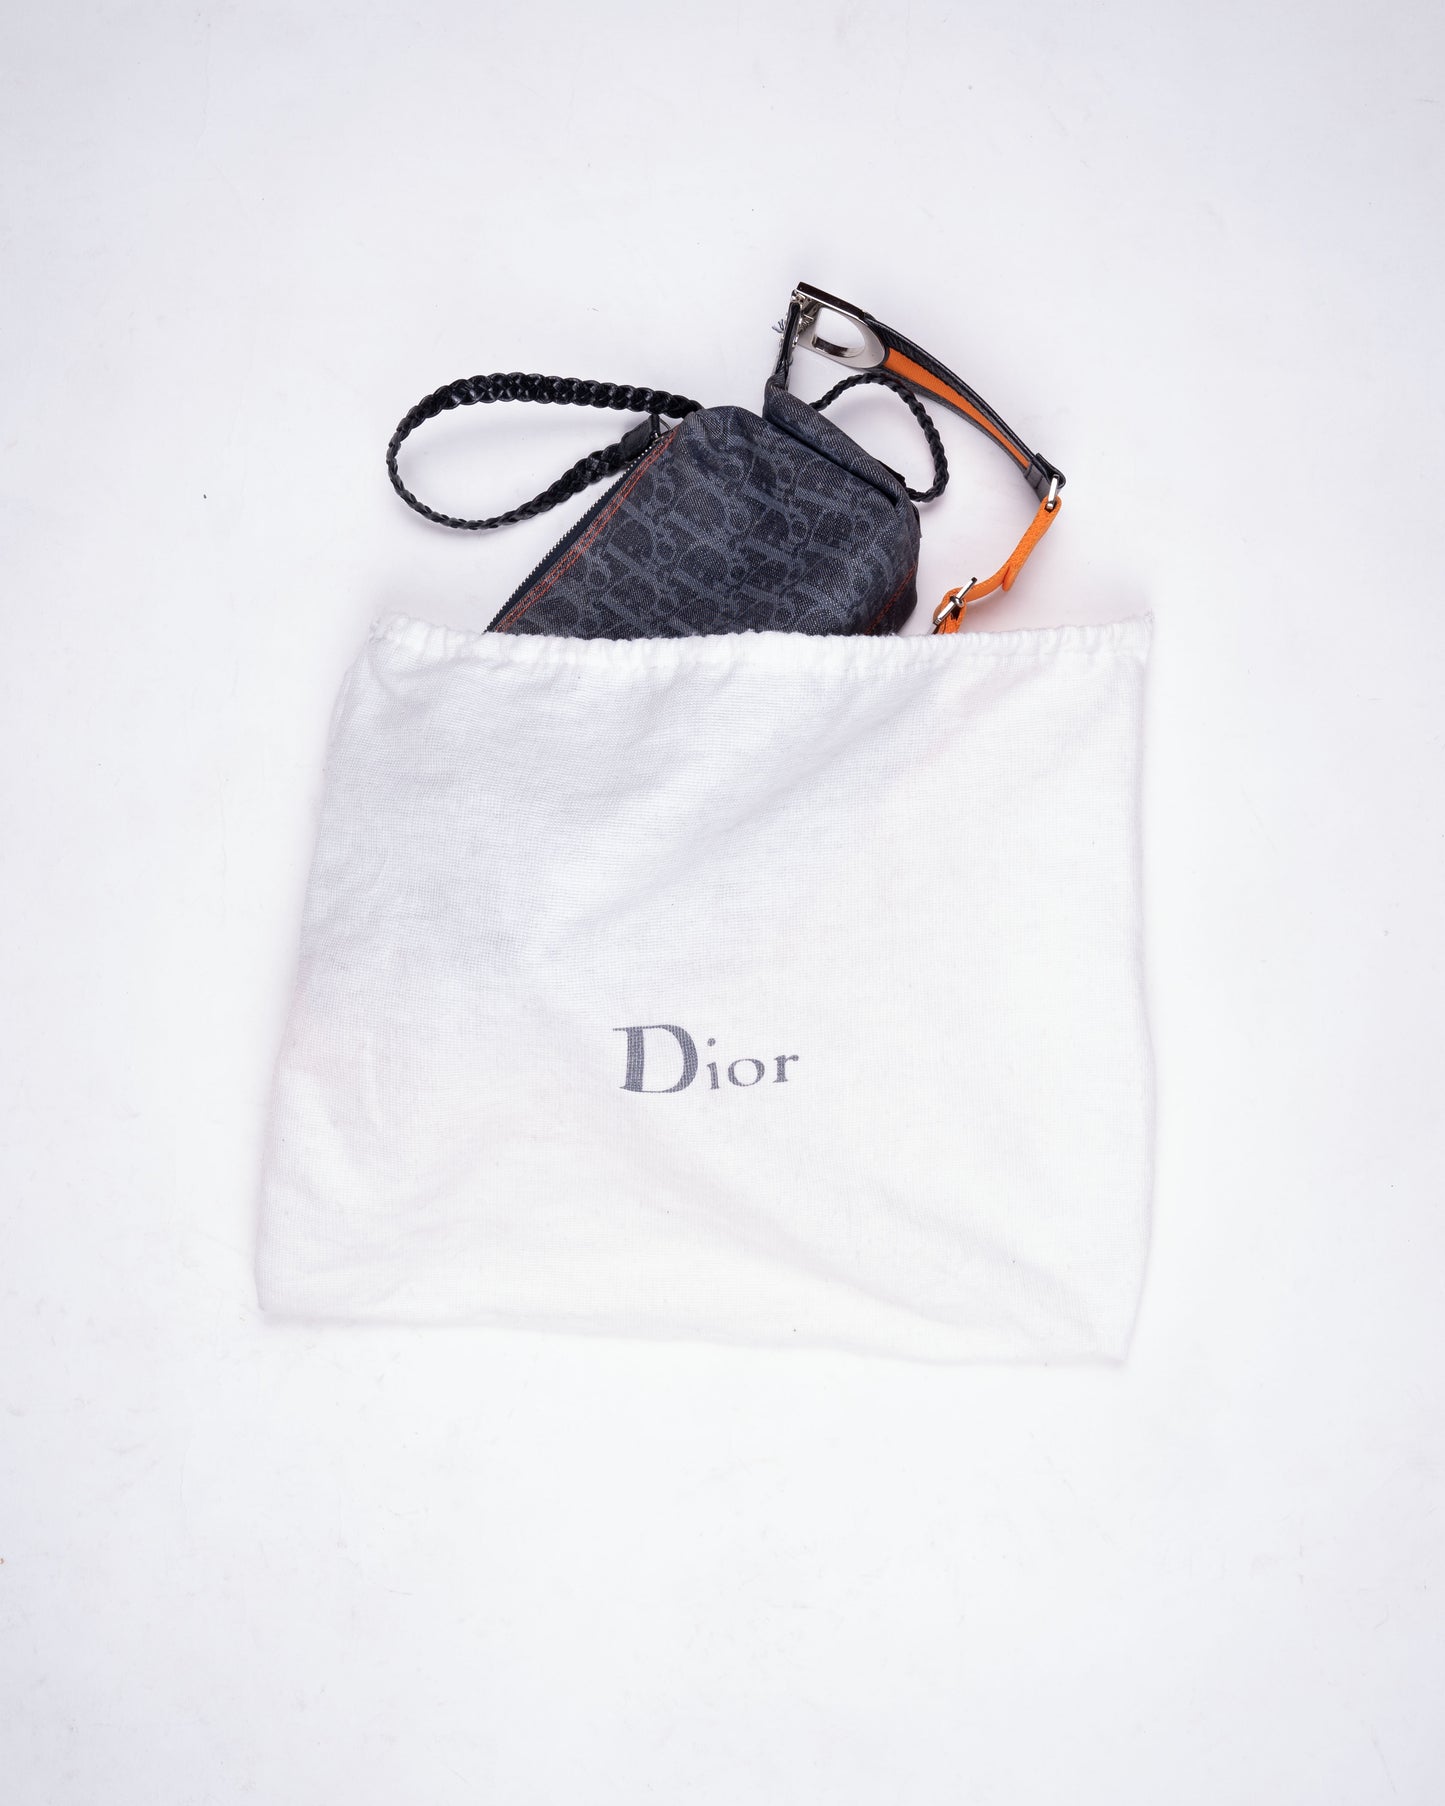 Dior by John Galliano "Remove before flight" bag